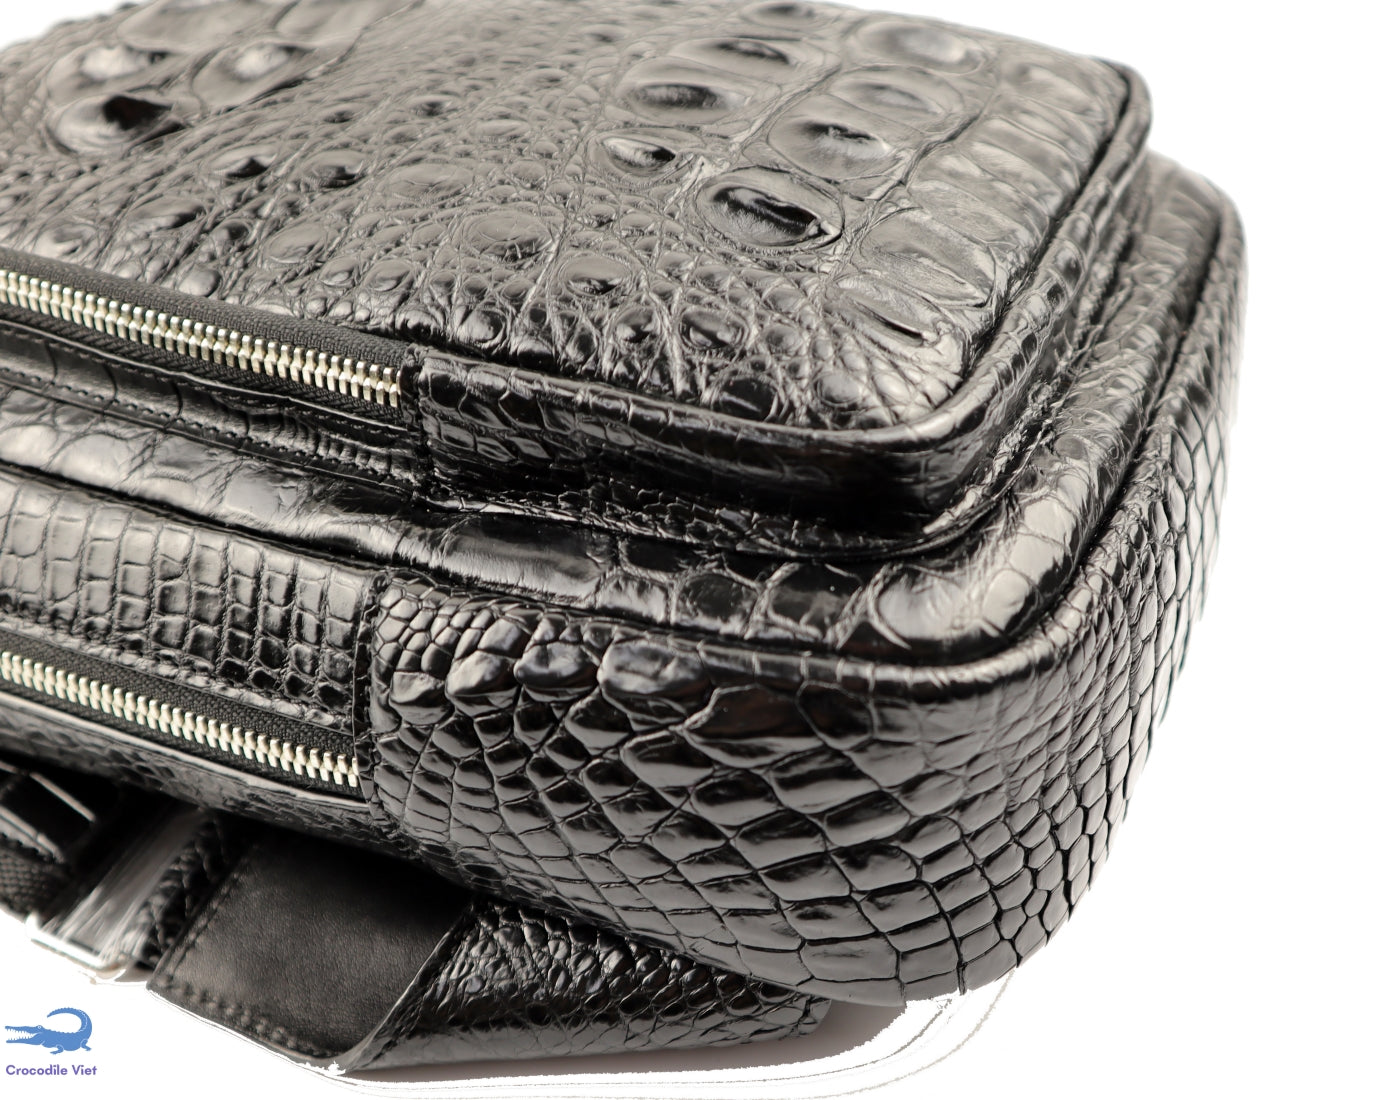 Genuine Crocodile Leather Bags Shoulder Cross Body Waterfly Sling